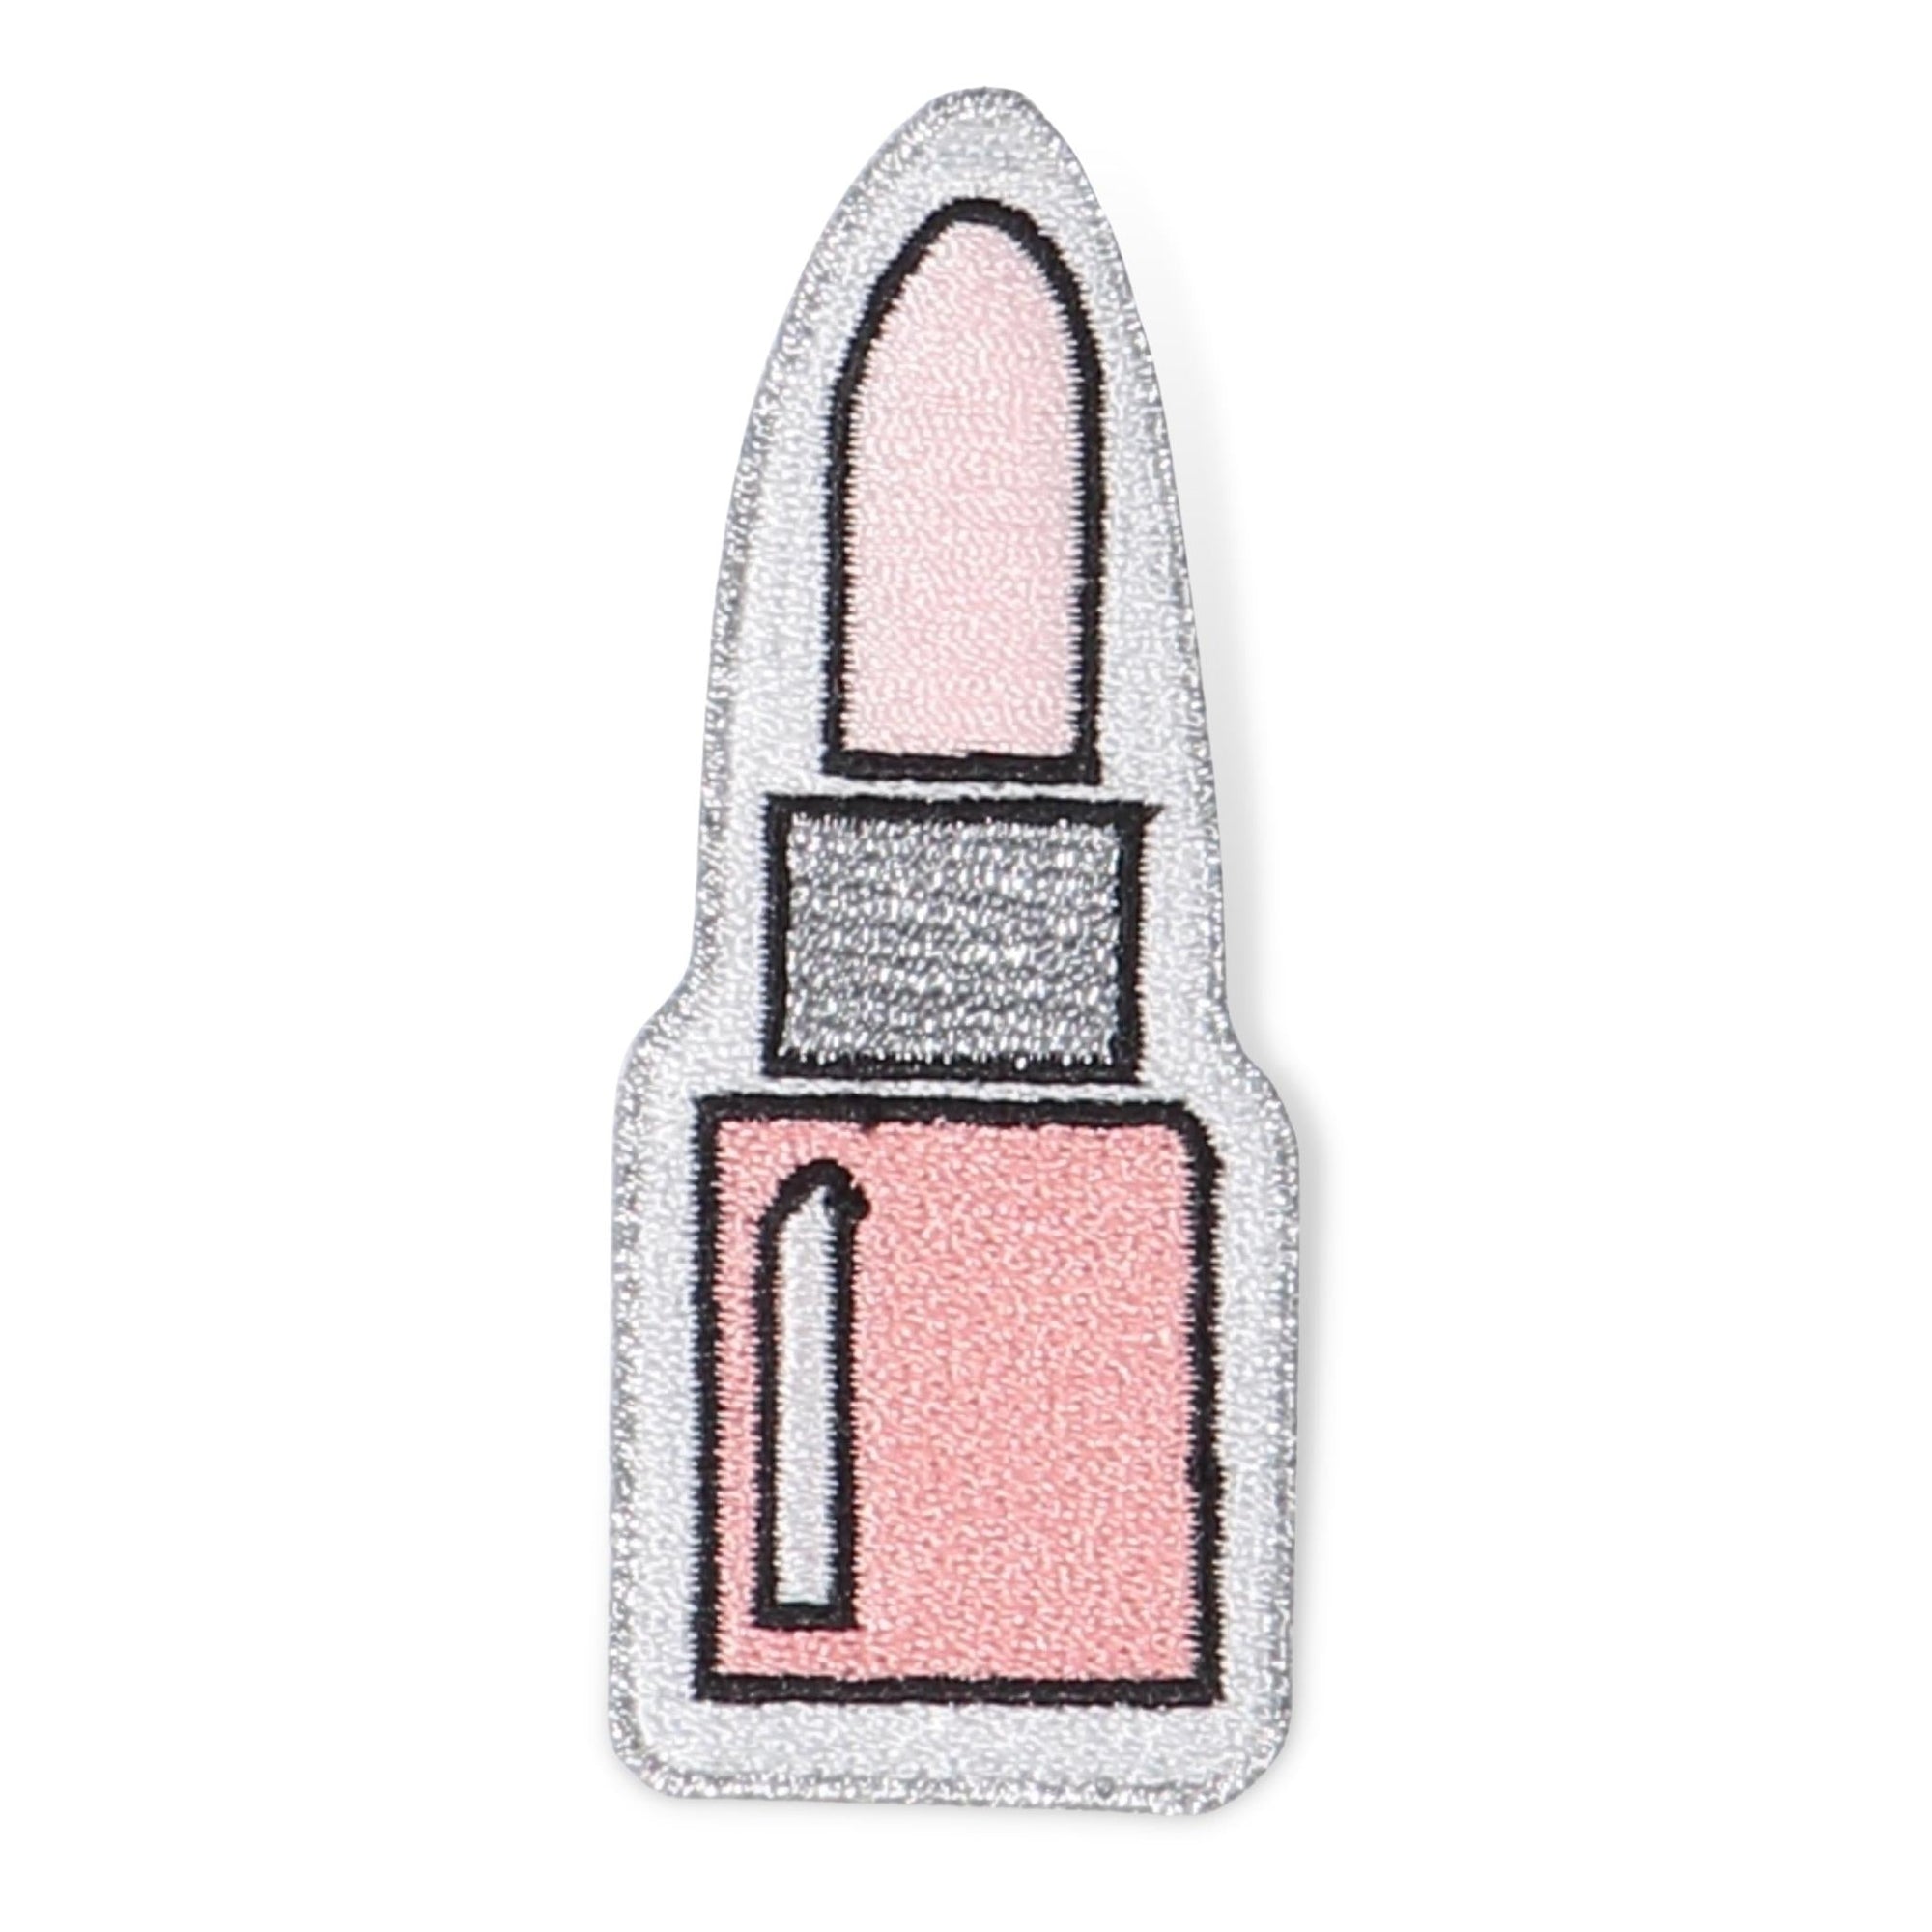 SCLN Lipstick Essential Beauty Patches - a Spirit Animal - Patches active Jun 2022 Clover Color-Lipstick